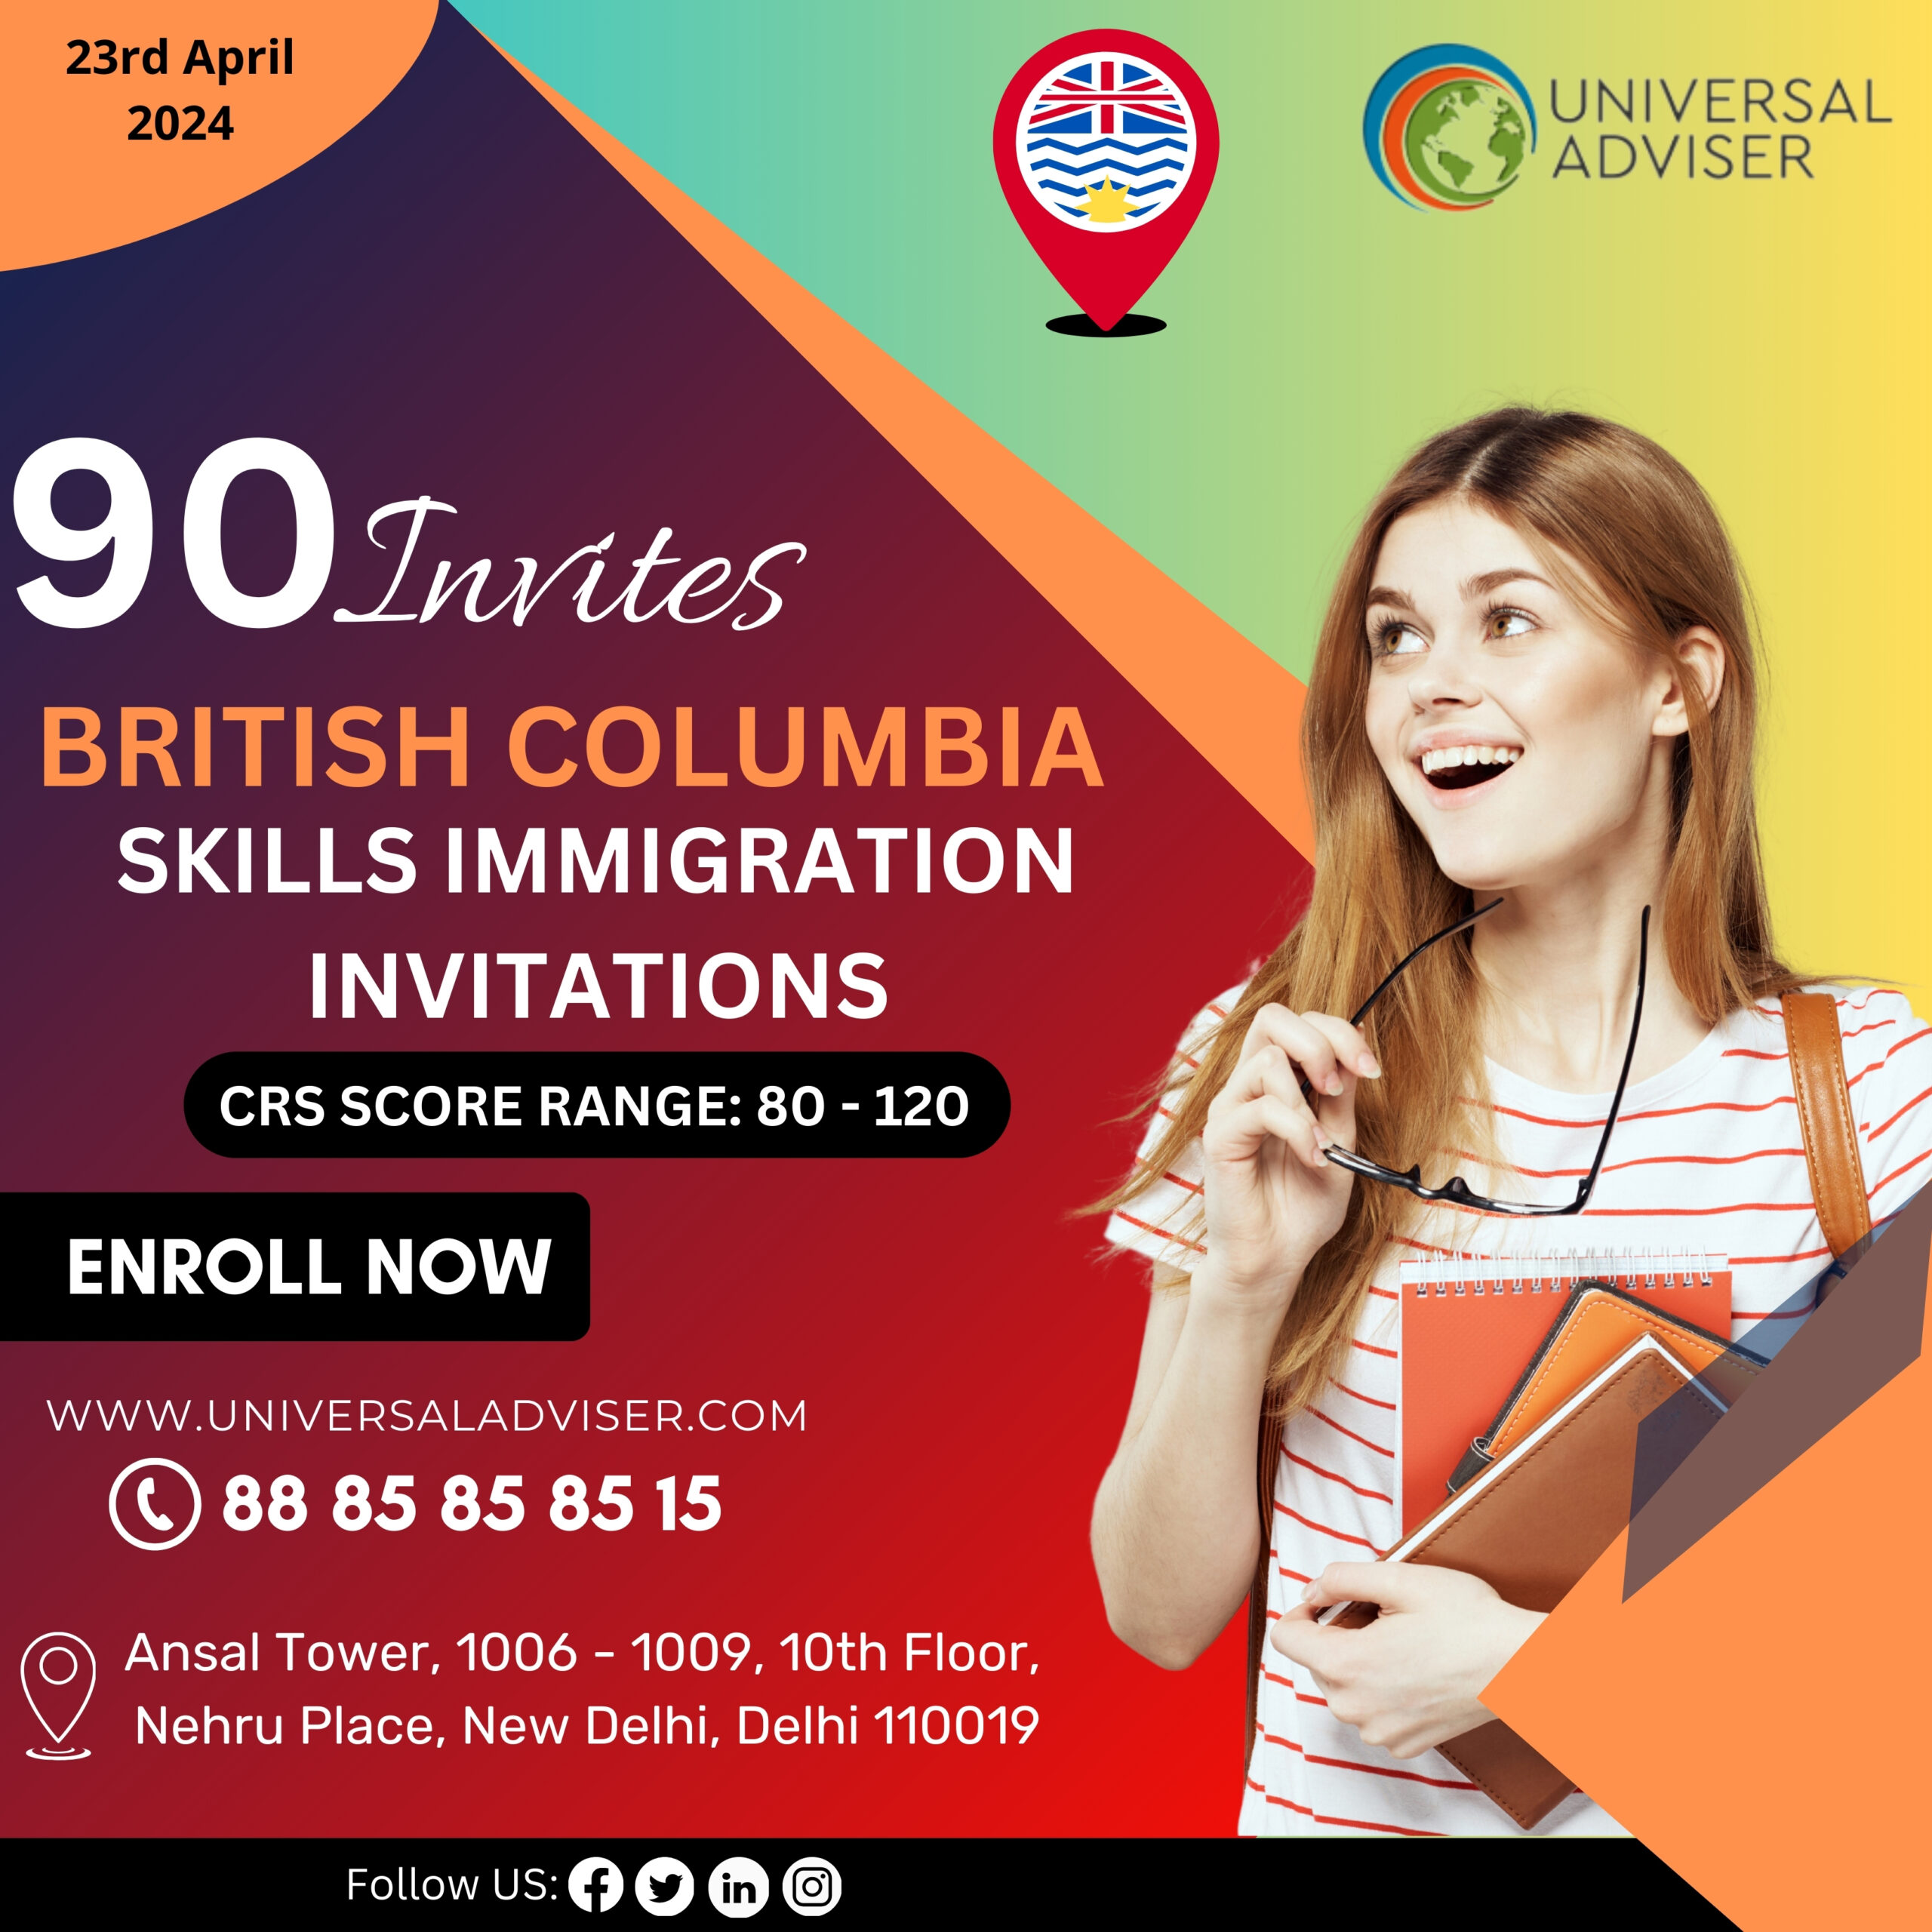 British Columbia Issues 90 Invitations in Latest PNP Draw